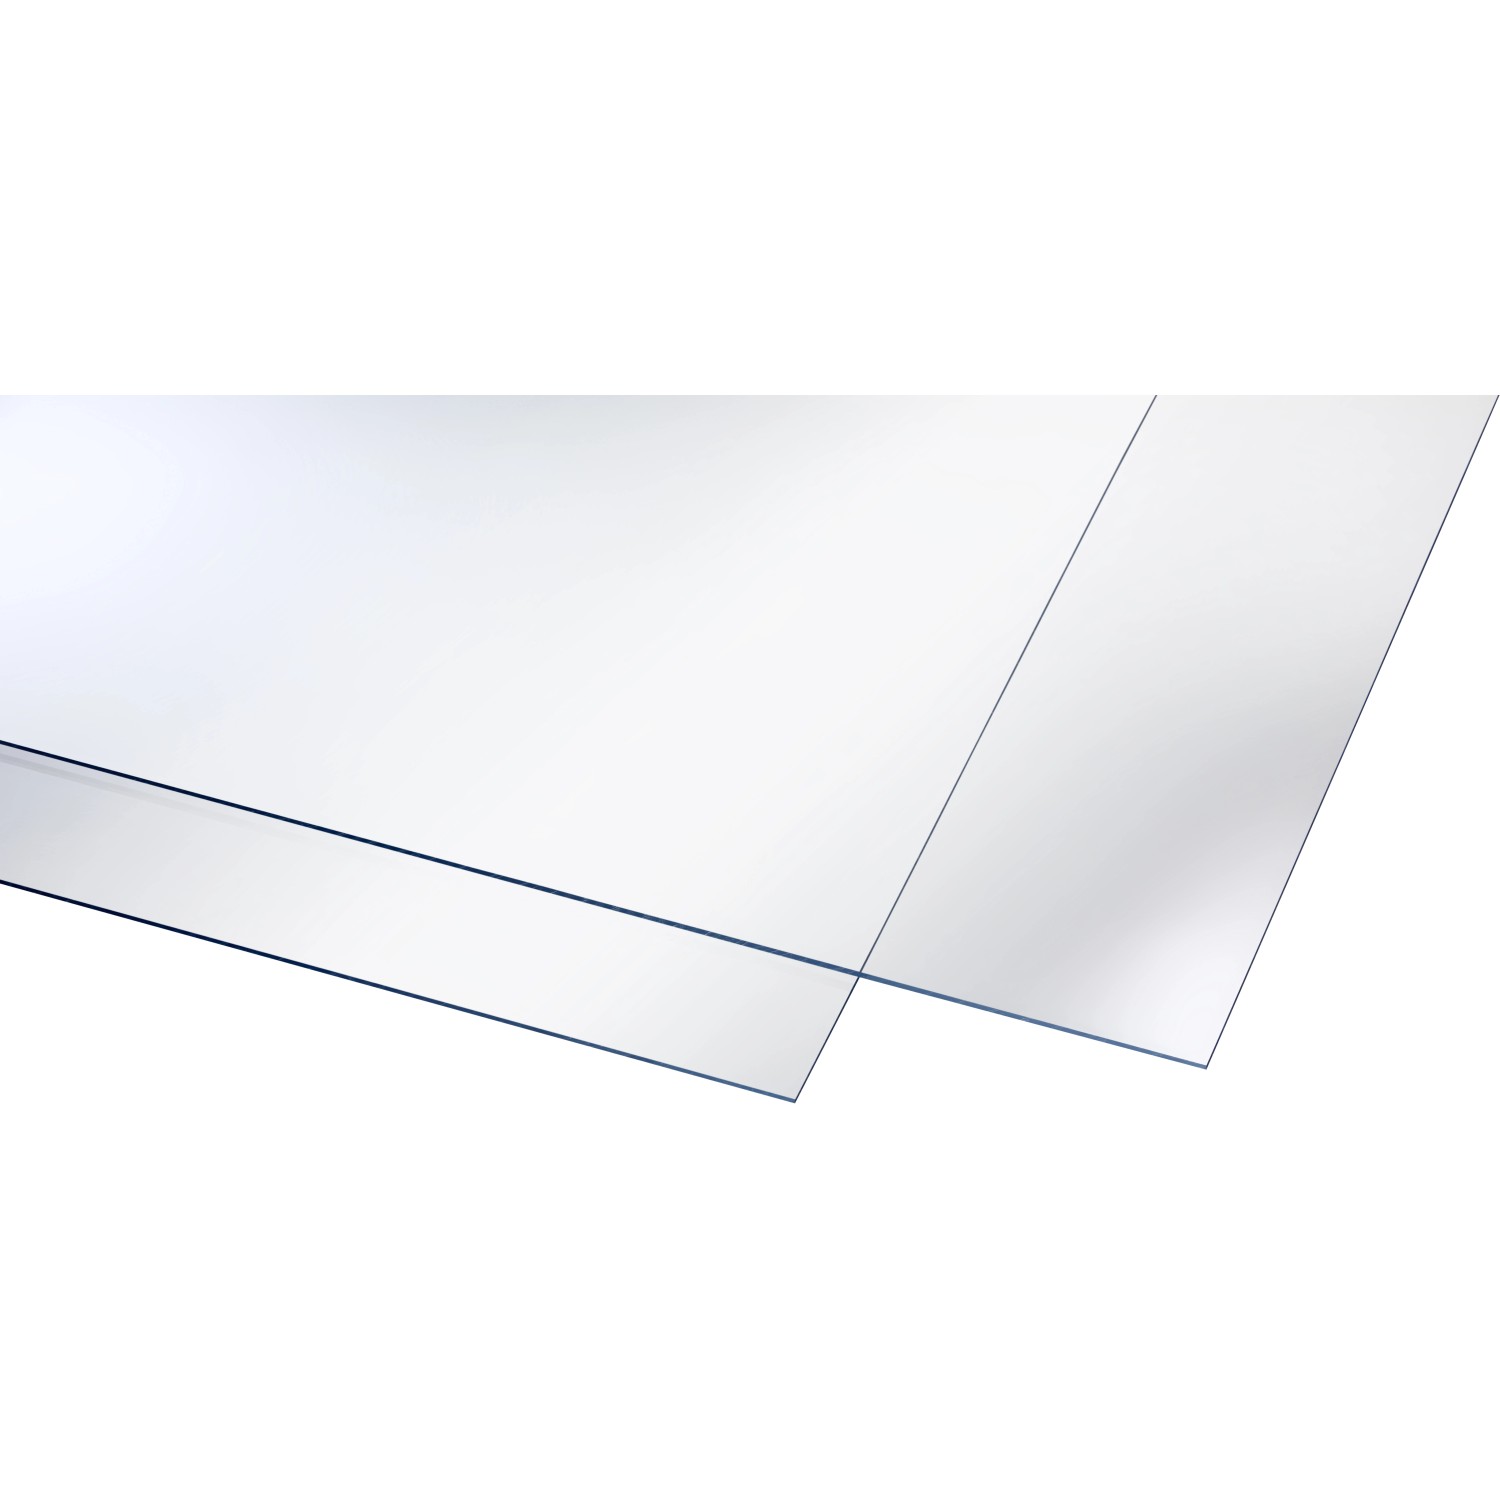 Polystyrol Platten - transparent & multifunktional - Bastelplatten